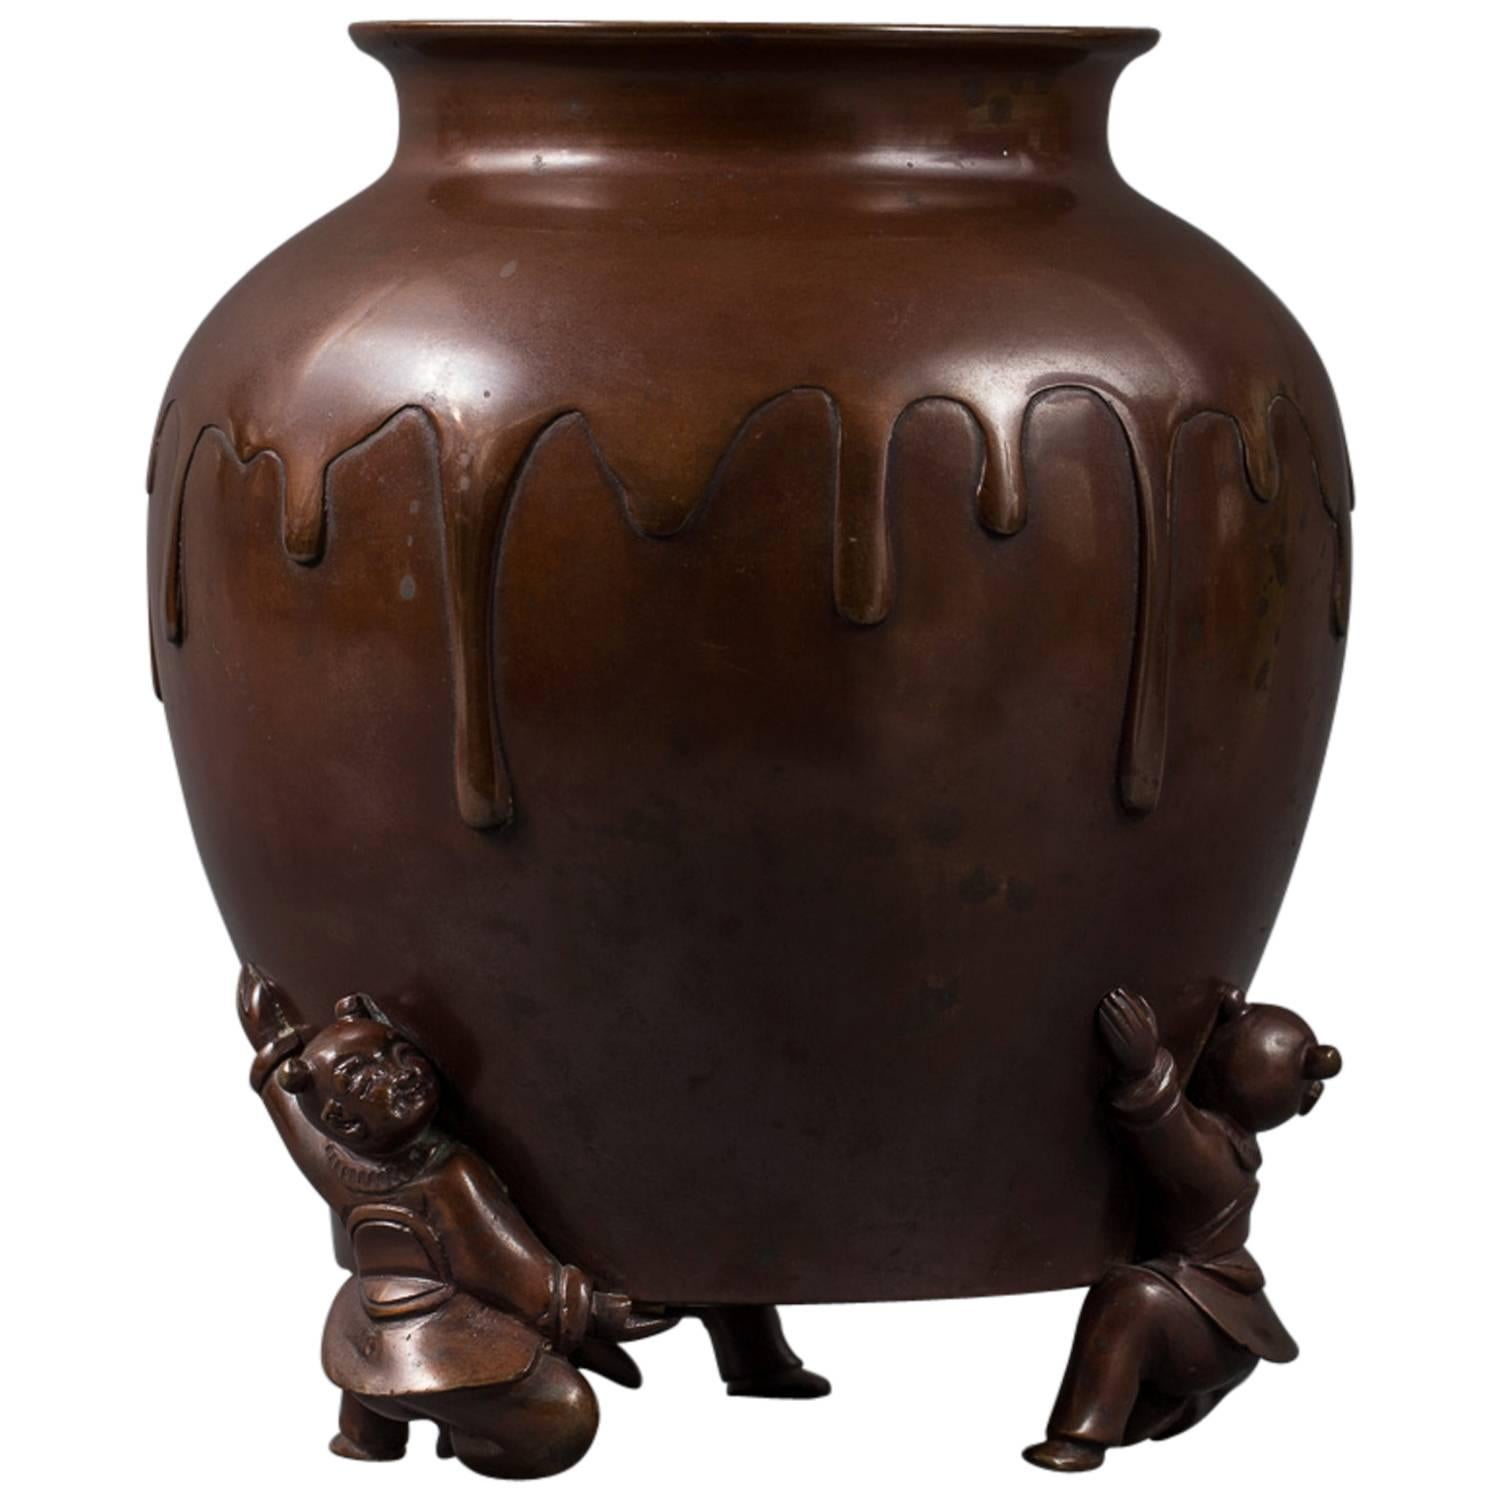 Japanes Bronze Vase with Kariko or Children Figures as Legs